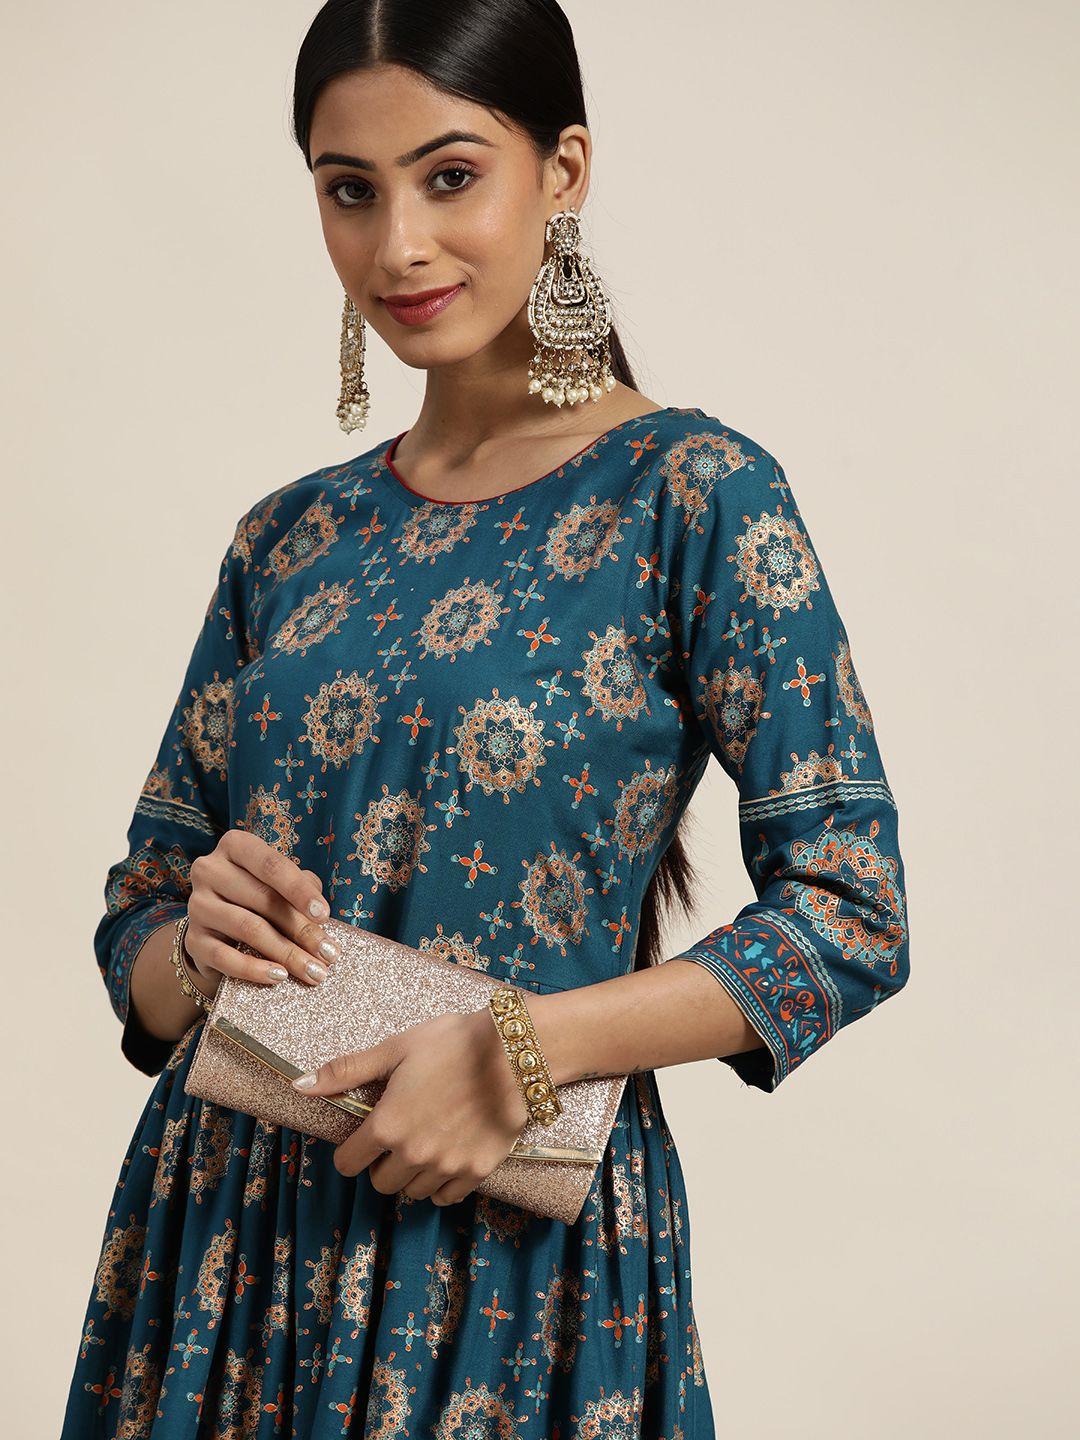 sangria teal blue & gold-toned ethnic motifs ethnic midi dress